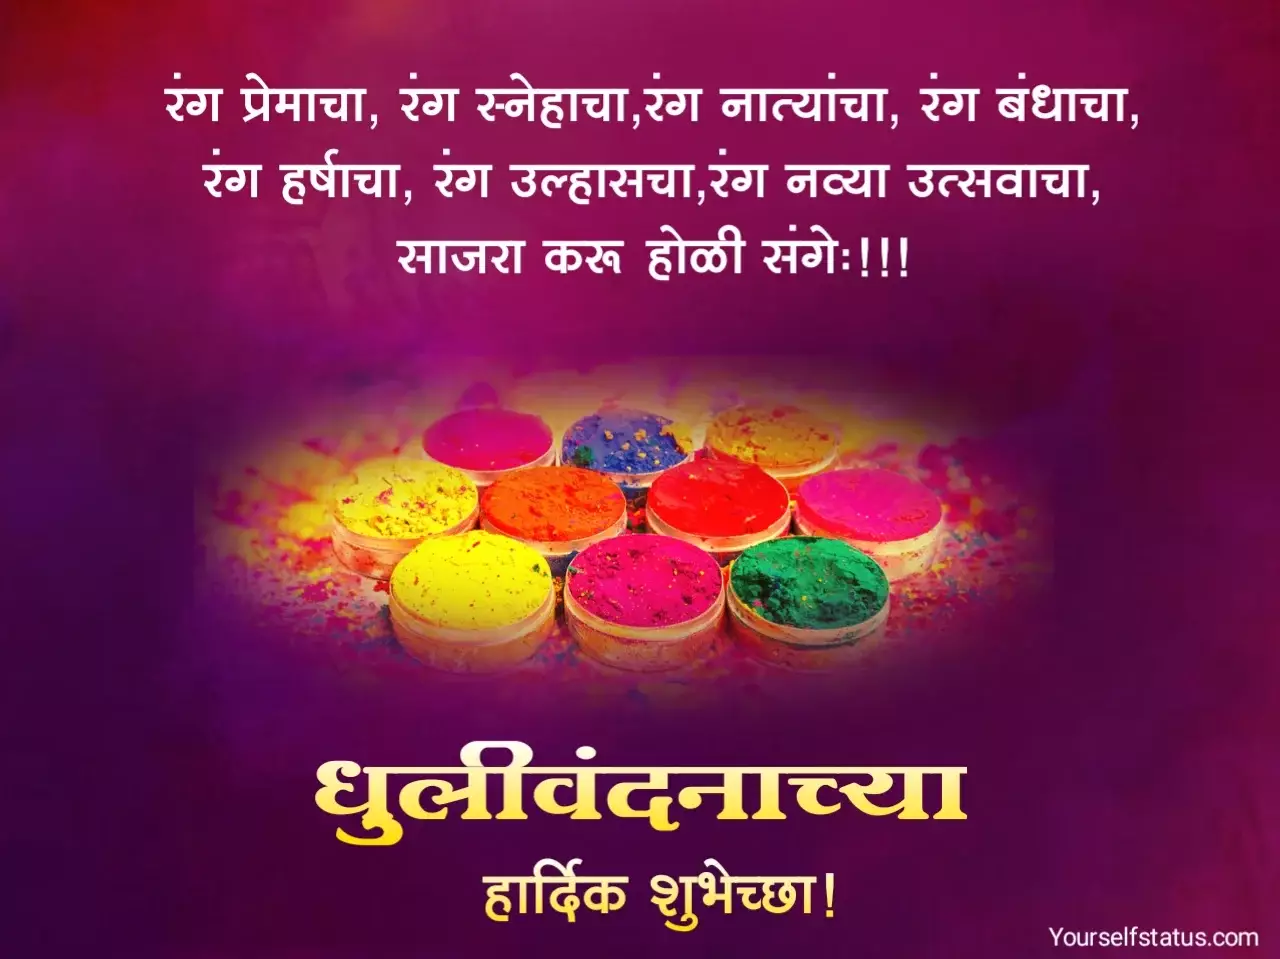 Dhulivandan wishes in marathi